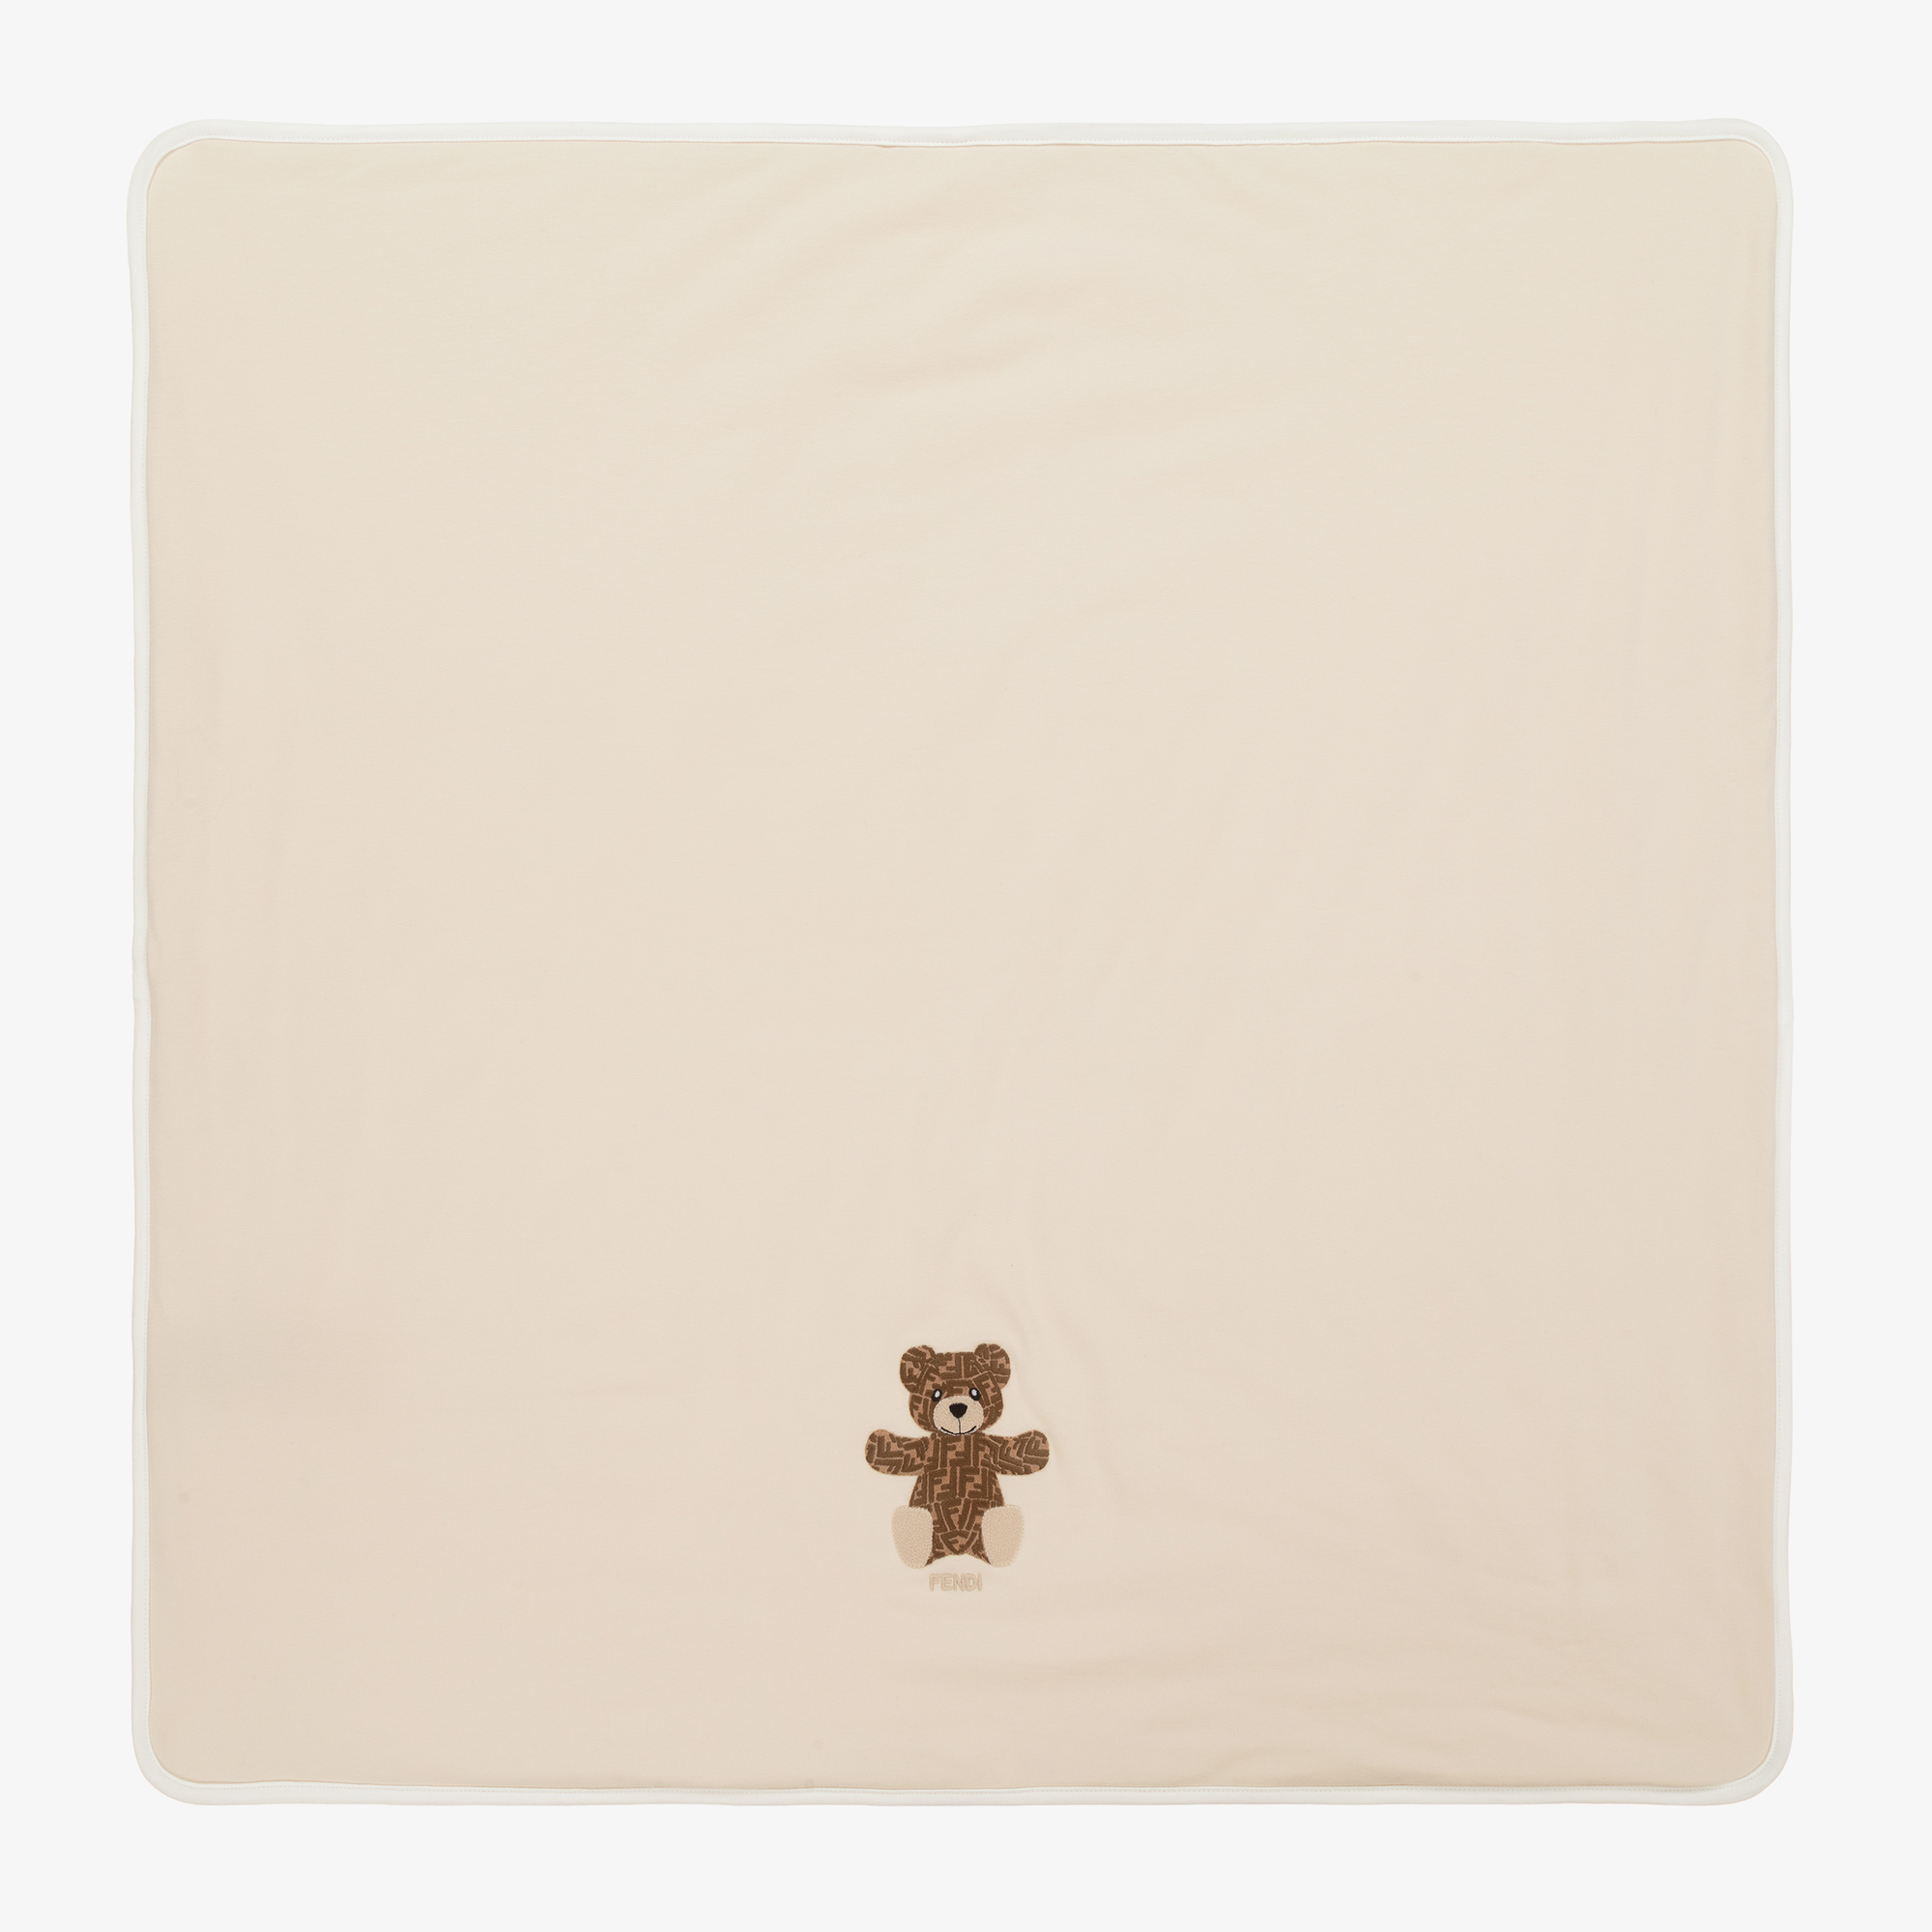 Fendi Baby Beige Brown Bear FF Logo Babysuit Gift Set